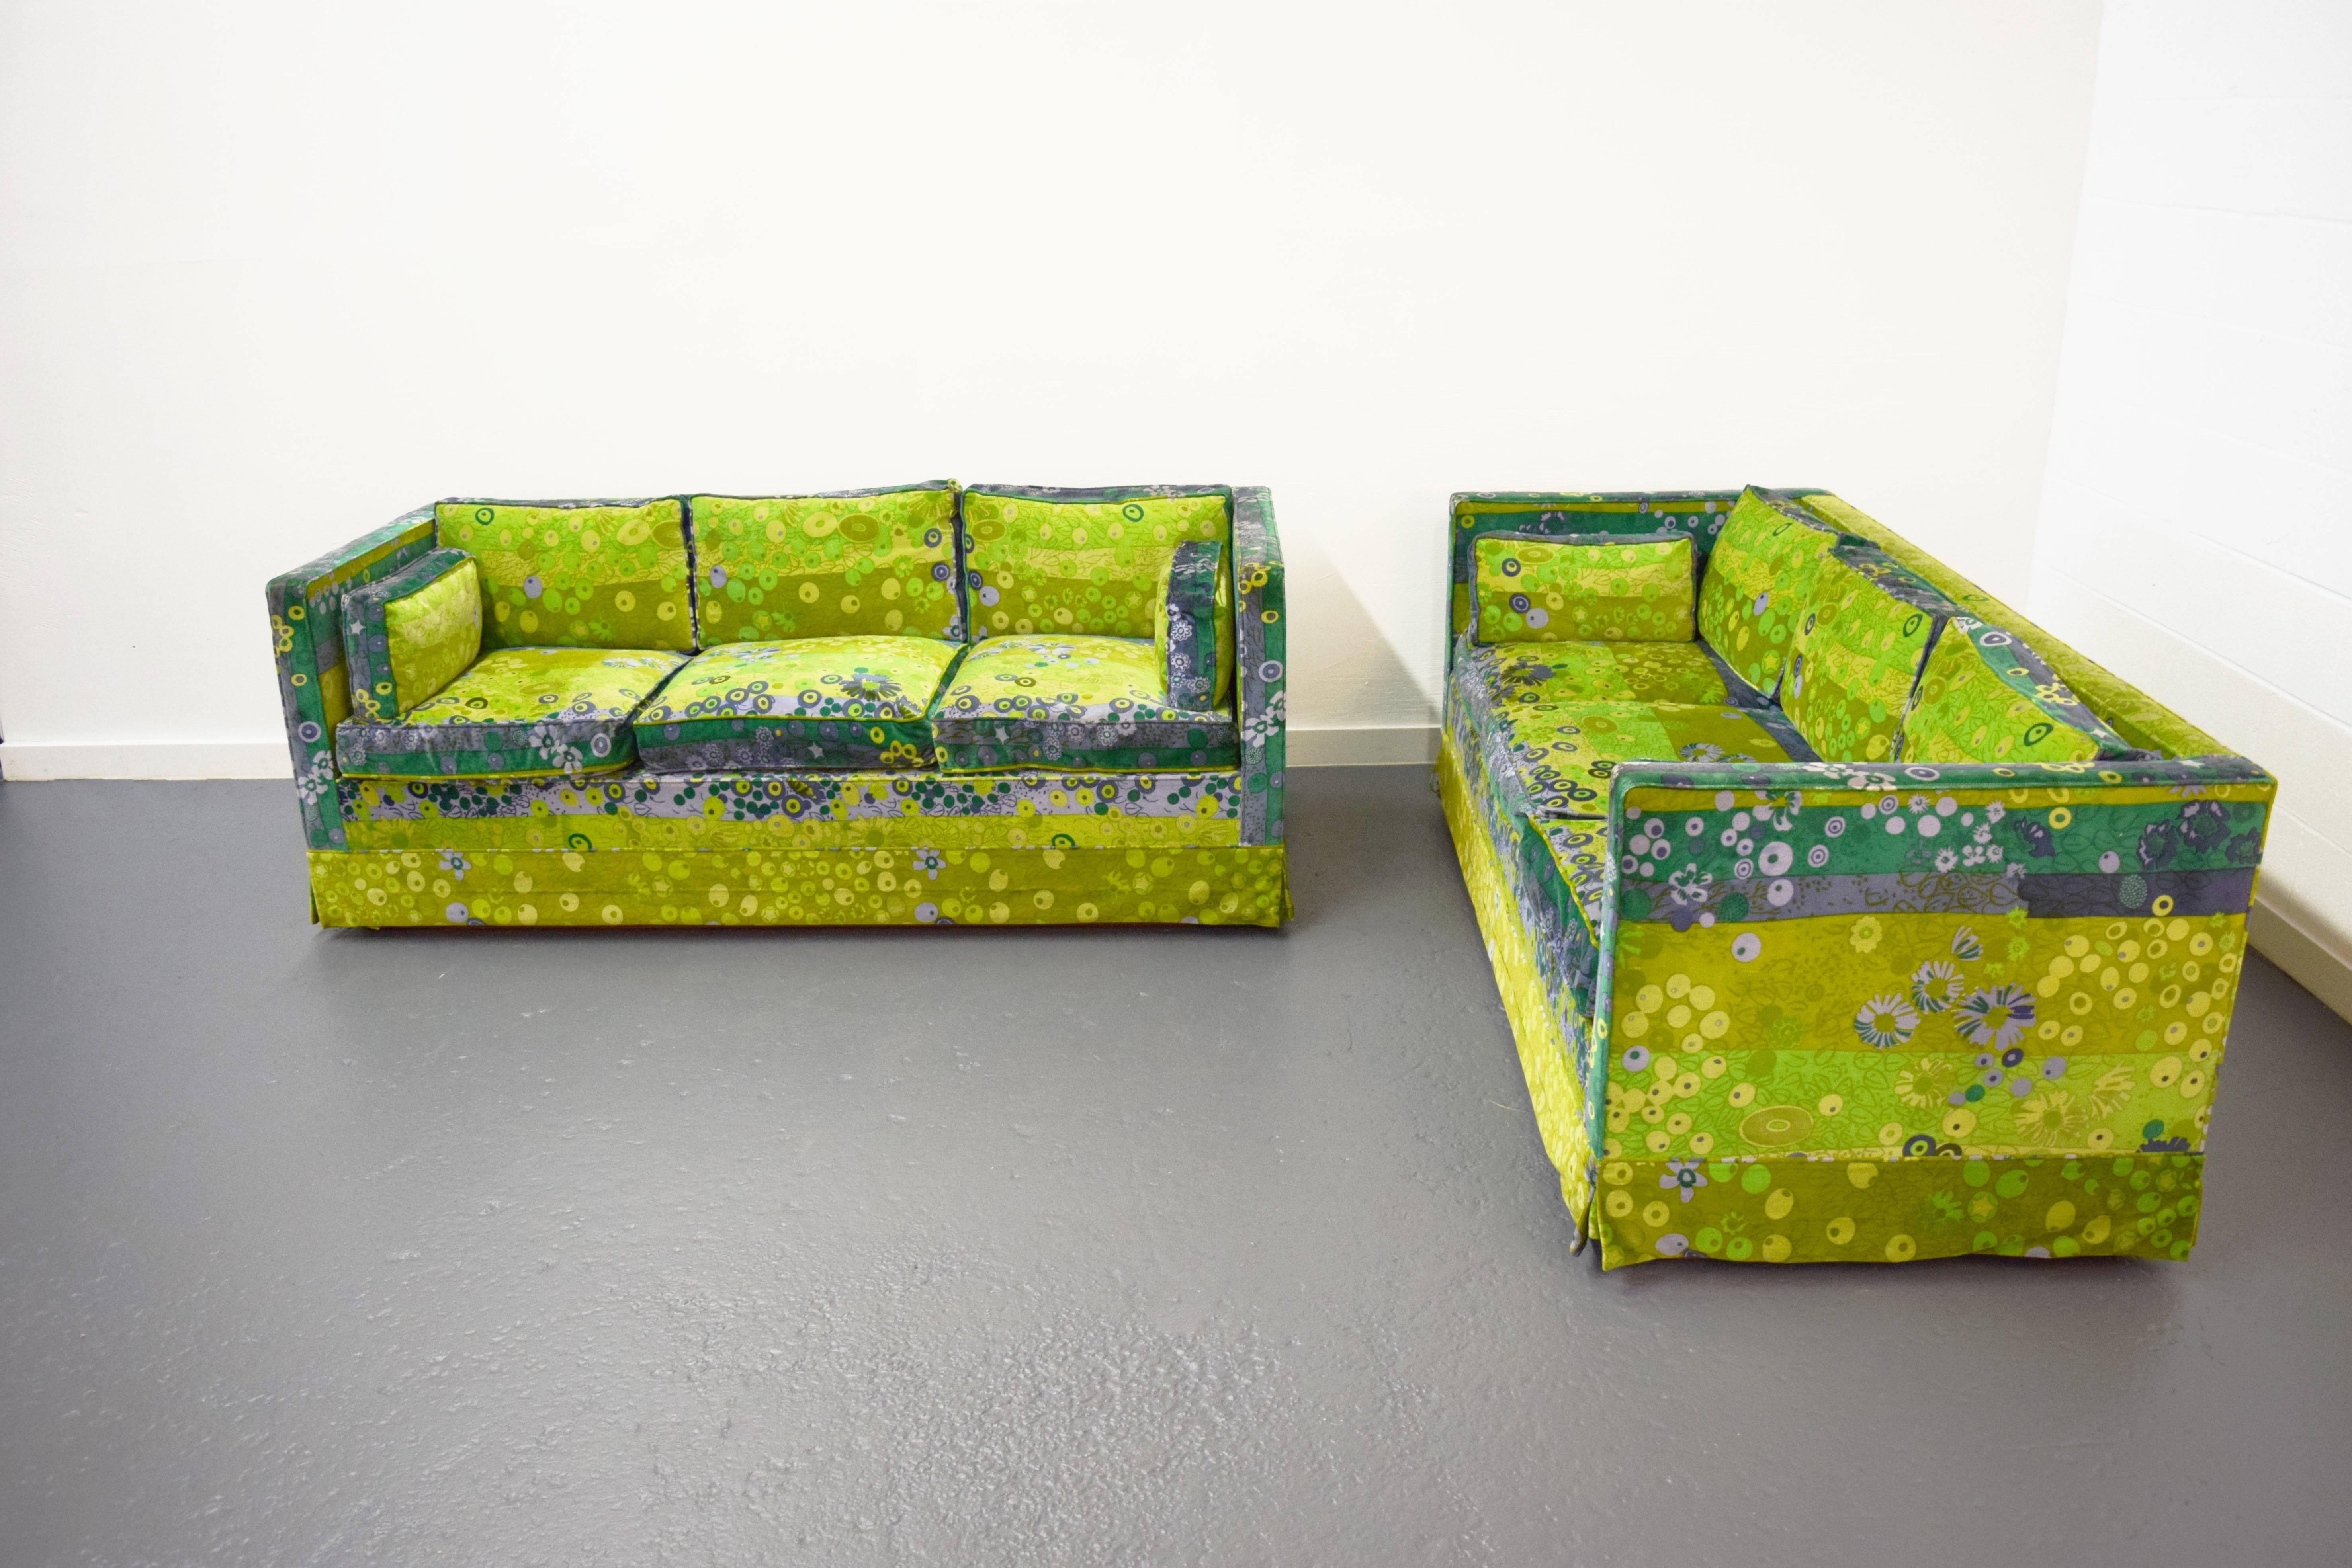 Pair of Mid-Century box sofas with original Jack Lenor Larsen fabric.